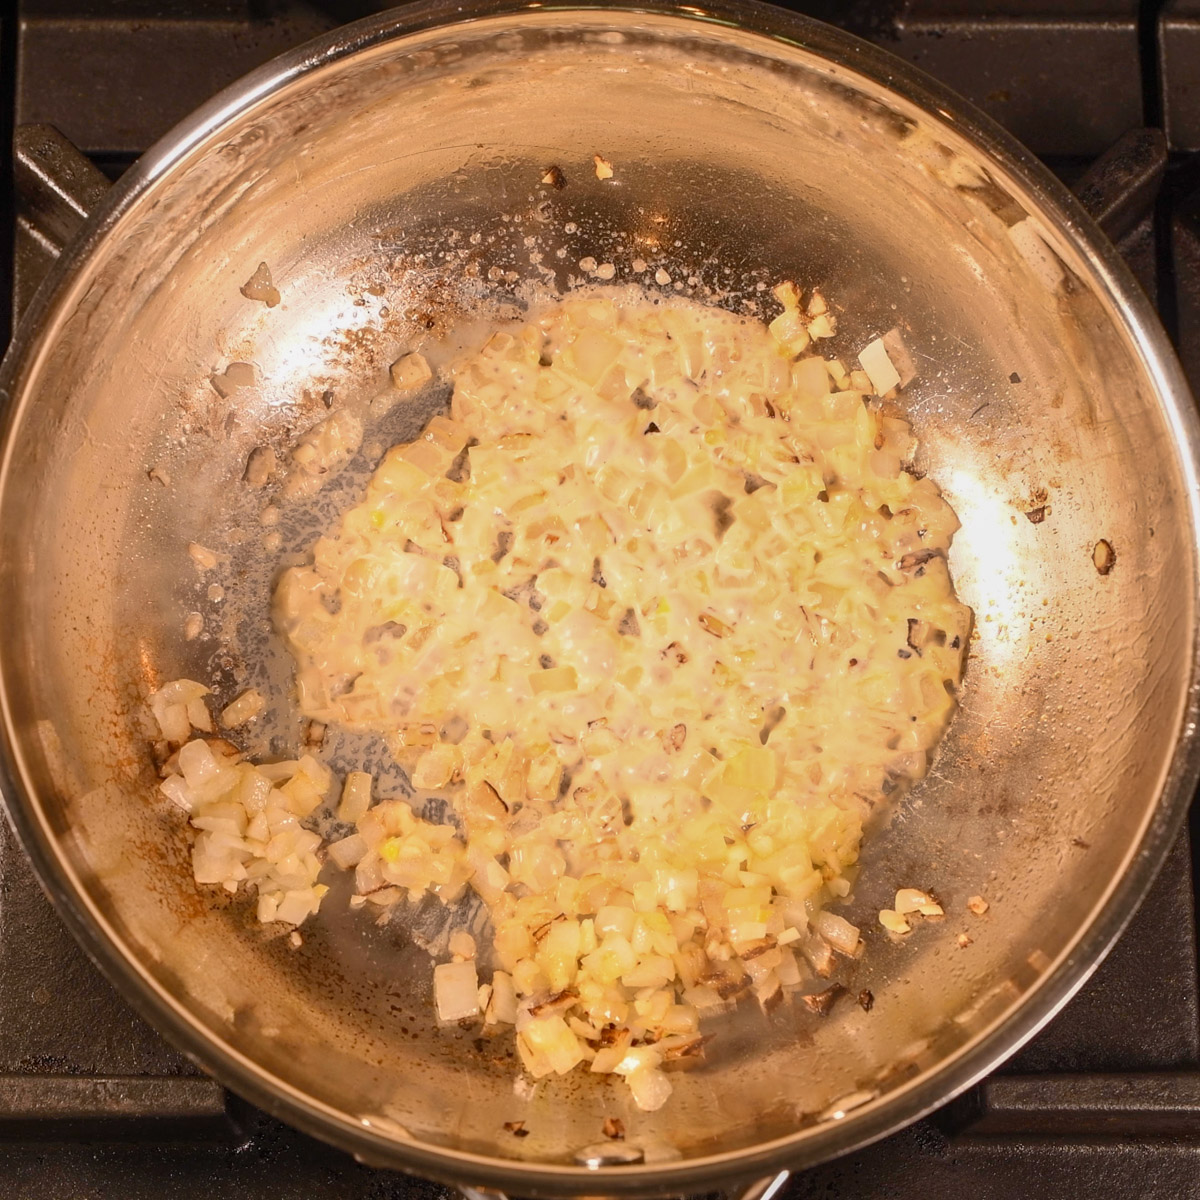 Add heavy cream to the onion and garlic.